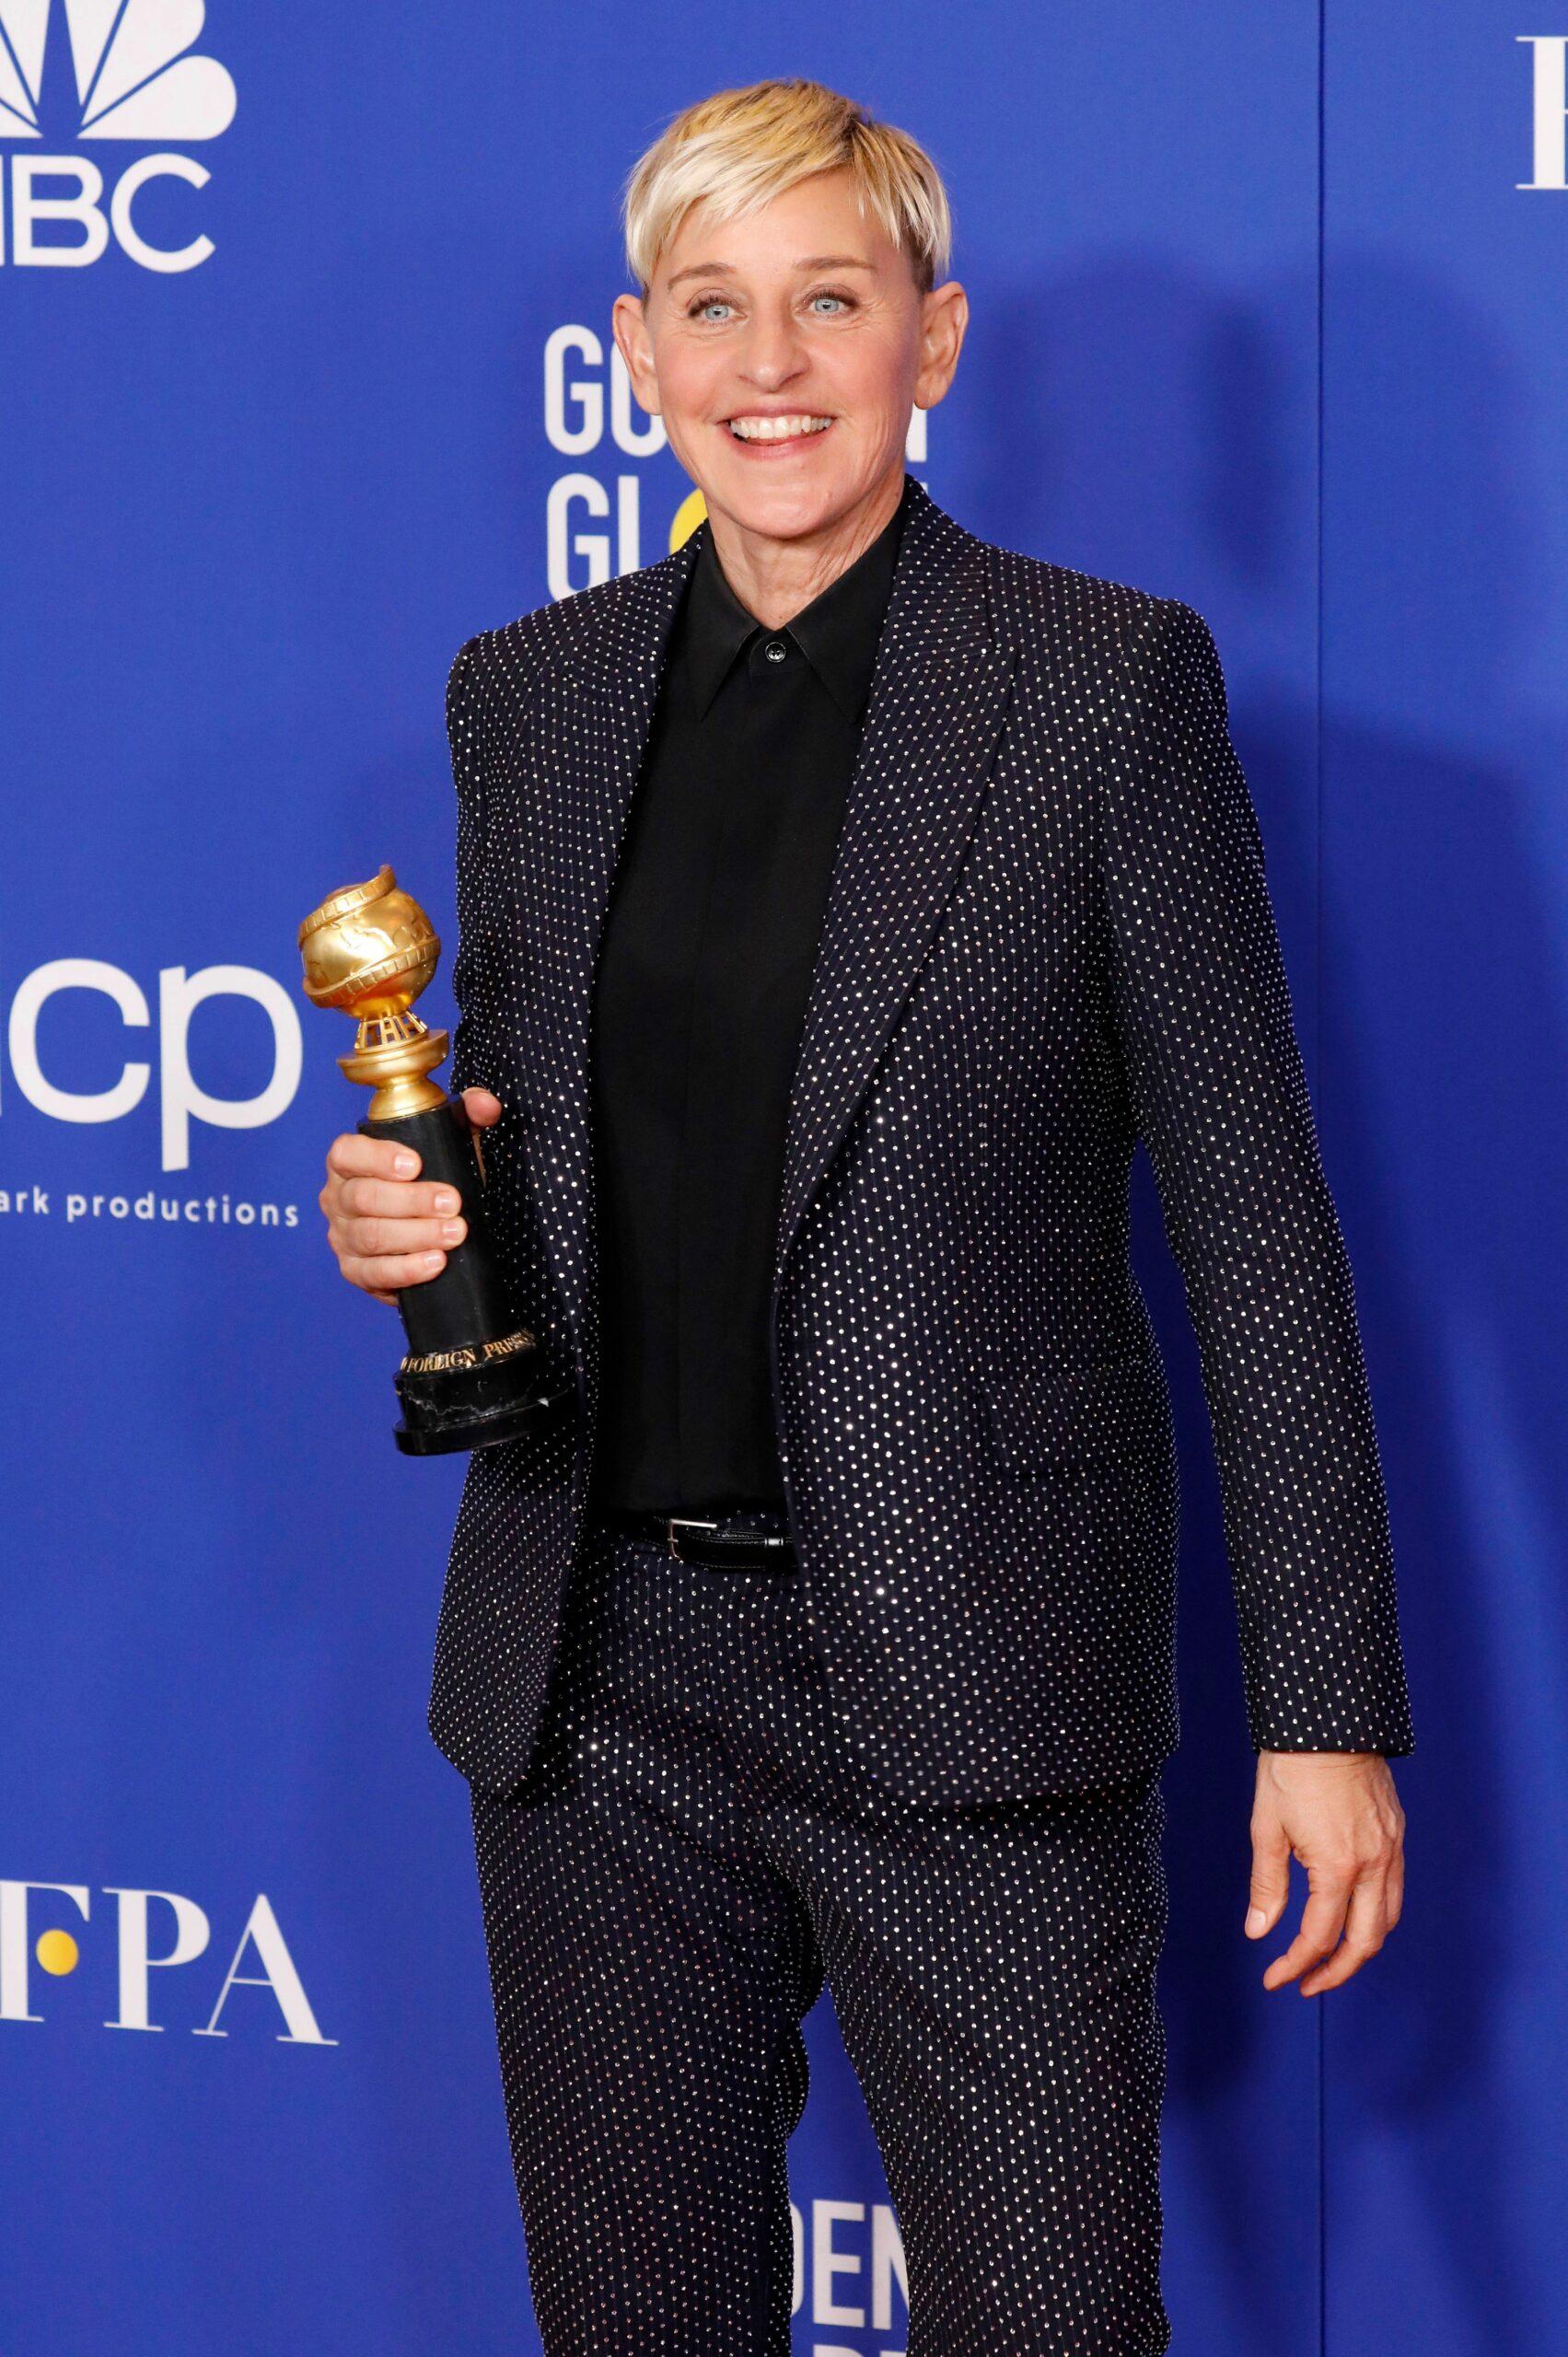 Award winner Ellen DeGeneres in the press room during the 77th Annual Golden Globe Awards at The Beverly Hilton Hotel on January 5, 2020 in Beverly Hills, California. 05 Jan 2020 Pictured: Carol Burnett. Photo credit: MEGA TheMegaAgency.com +1 888 505 6342 (Mega Agency TagID: MEGA582060_005.jpg) [Photo via Mega Agency]